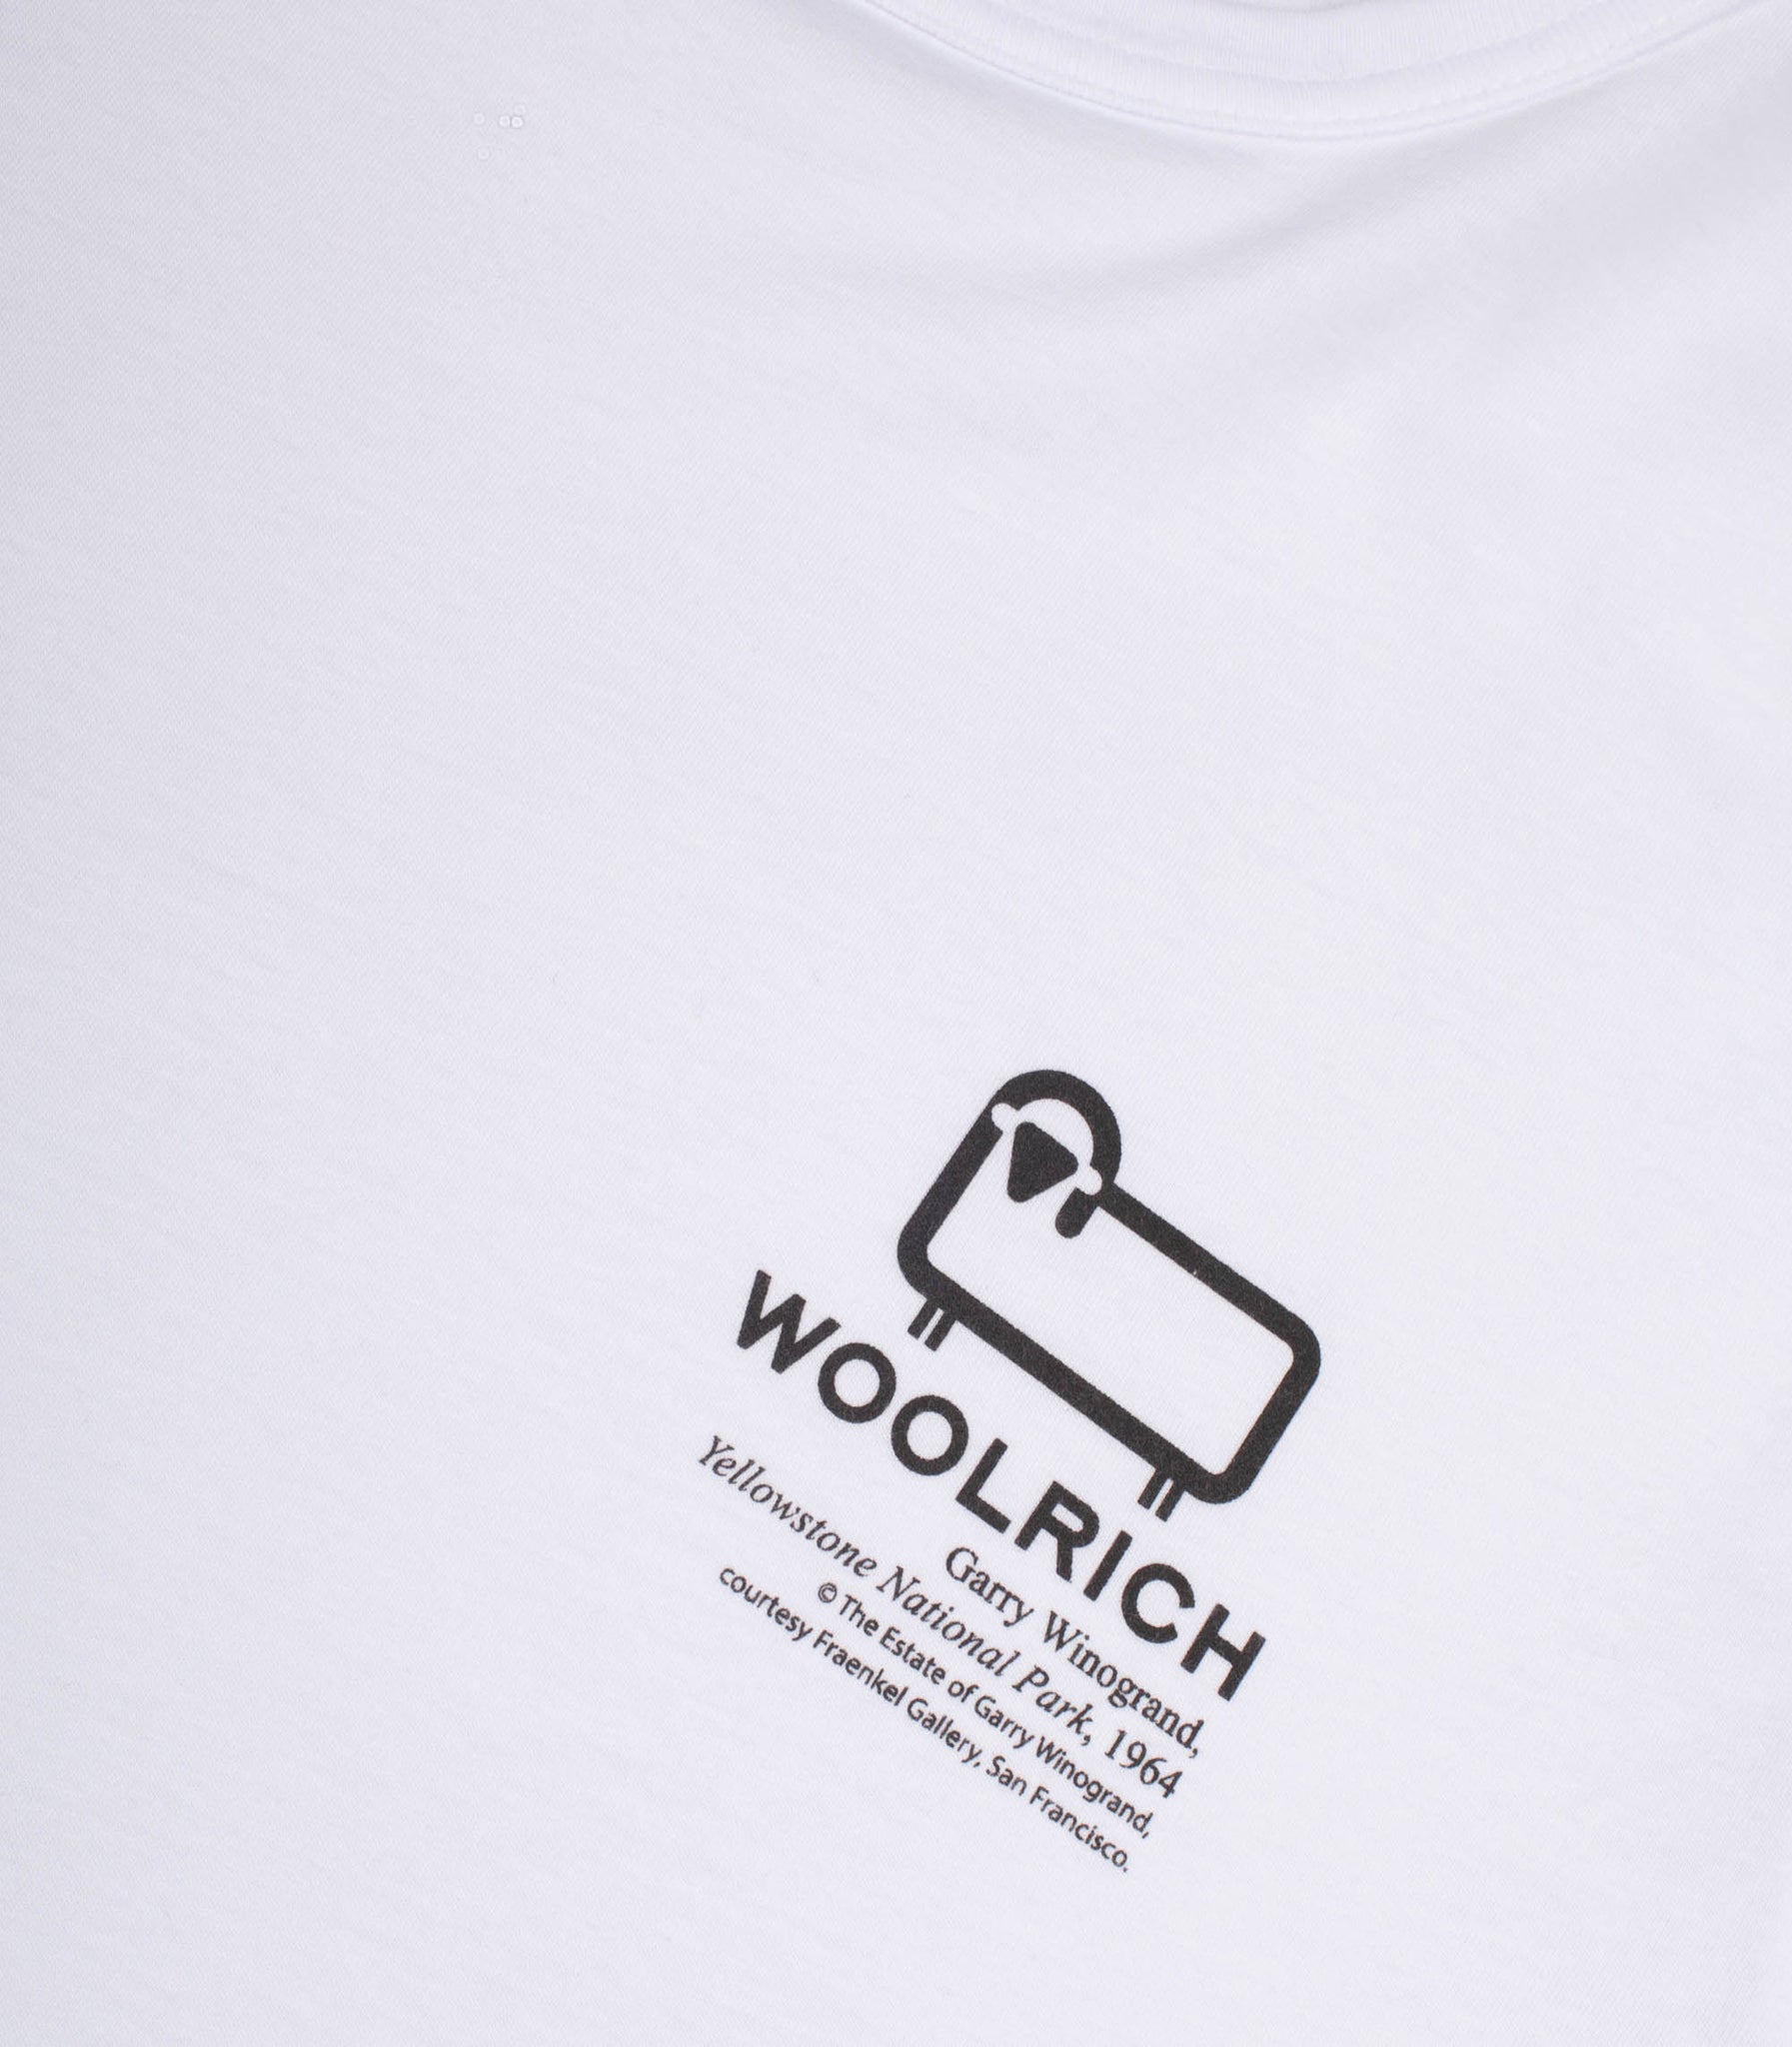 T-Shirt Woolrich Photographic Tee Bianco Uomo